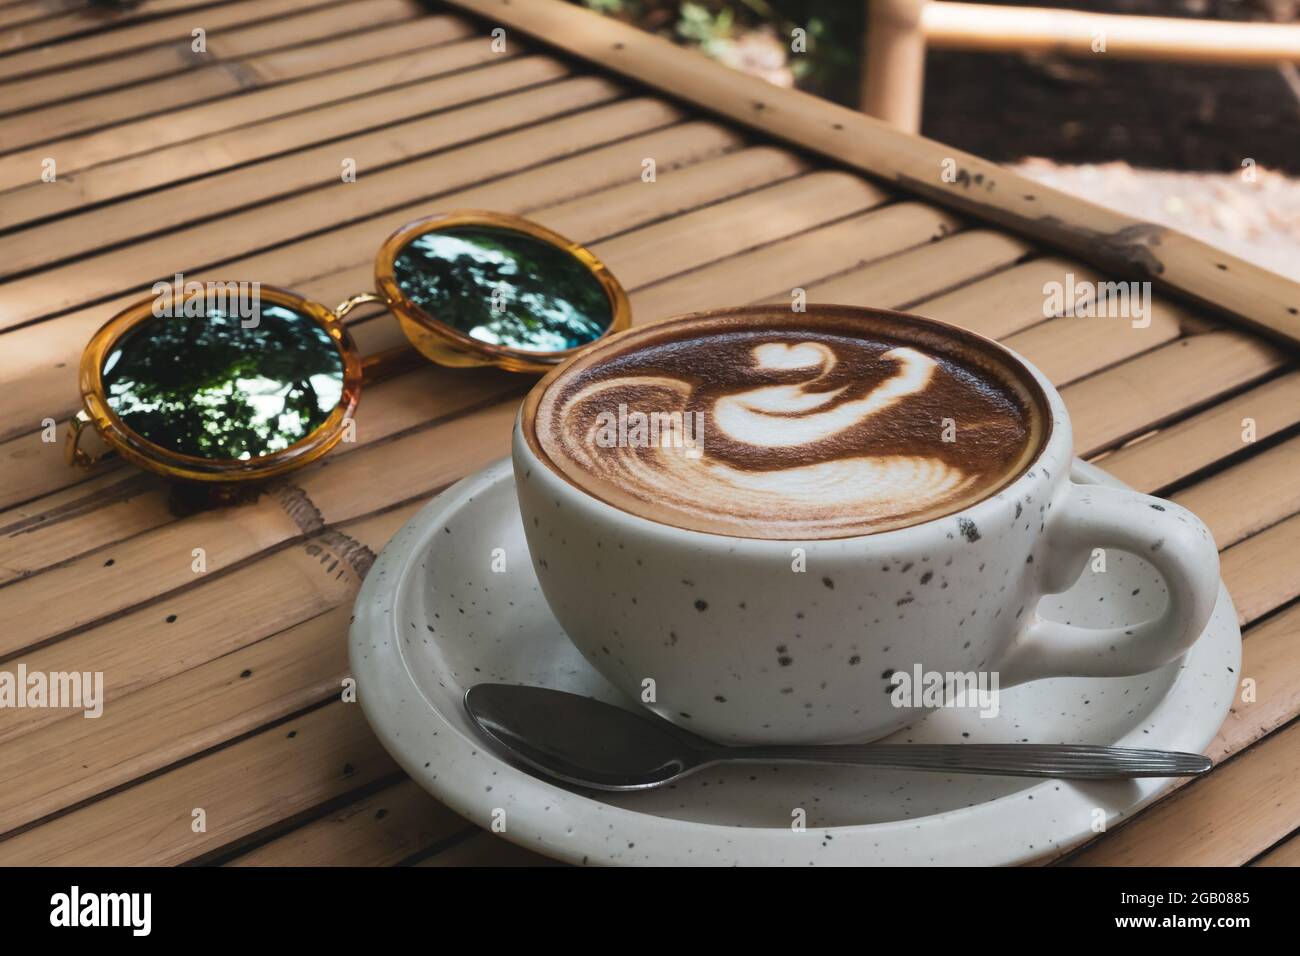 https://c8.alamy.com/comp/2GB0885/cappuccino-recipe-mug-espresso-based-coffee-drink-traditionally-prepared-with-steamed-milk-foam-concept-background-in-retro-vintage-natural-garden-s-2GB0885.jpg